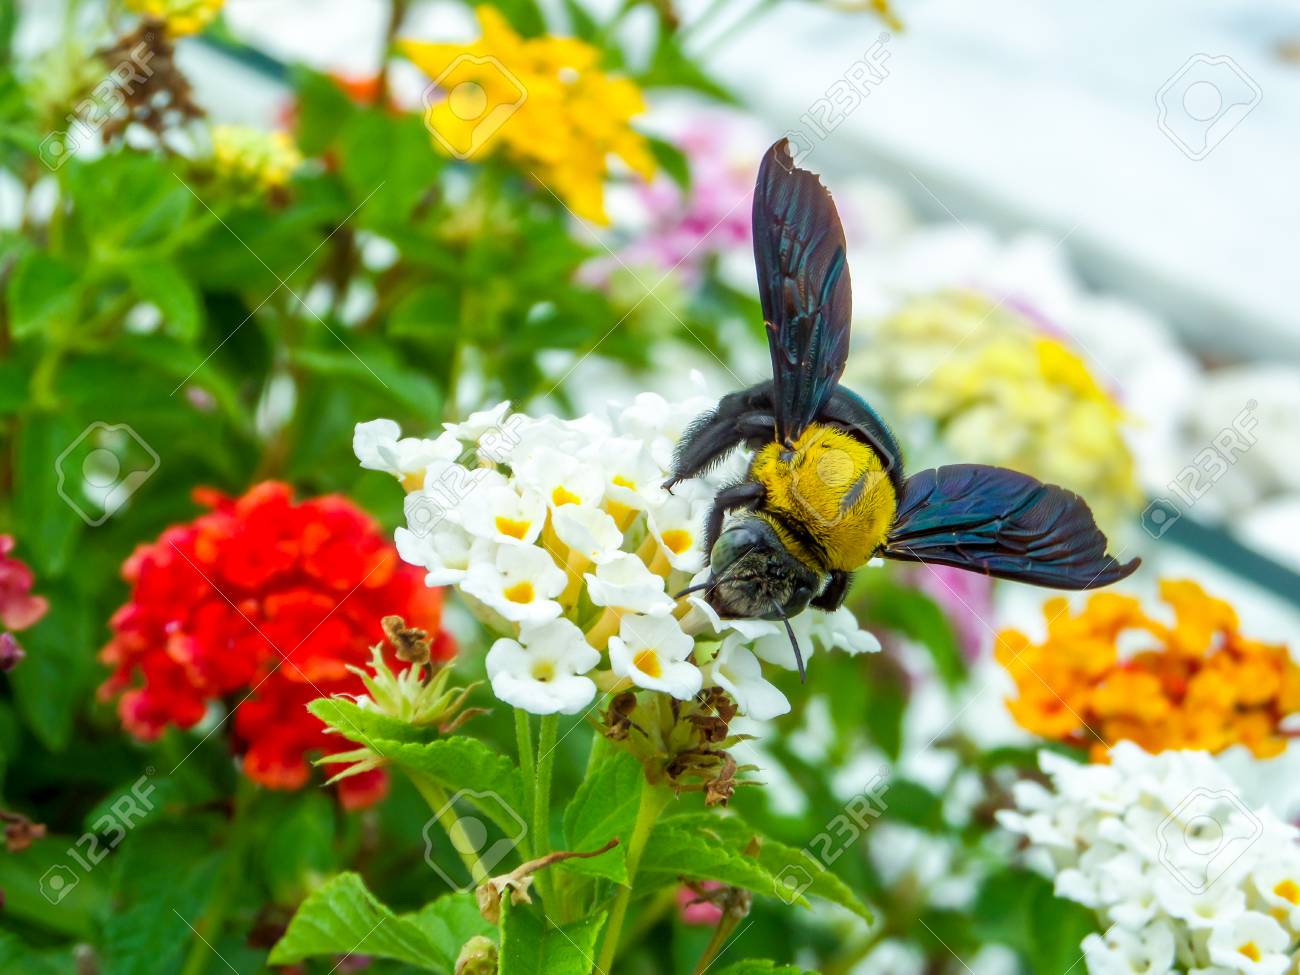 76851777-bumble-bee-find-sweet-of-lantana-beauty-flower-colorful-in-garden.jpg